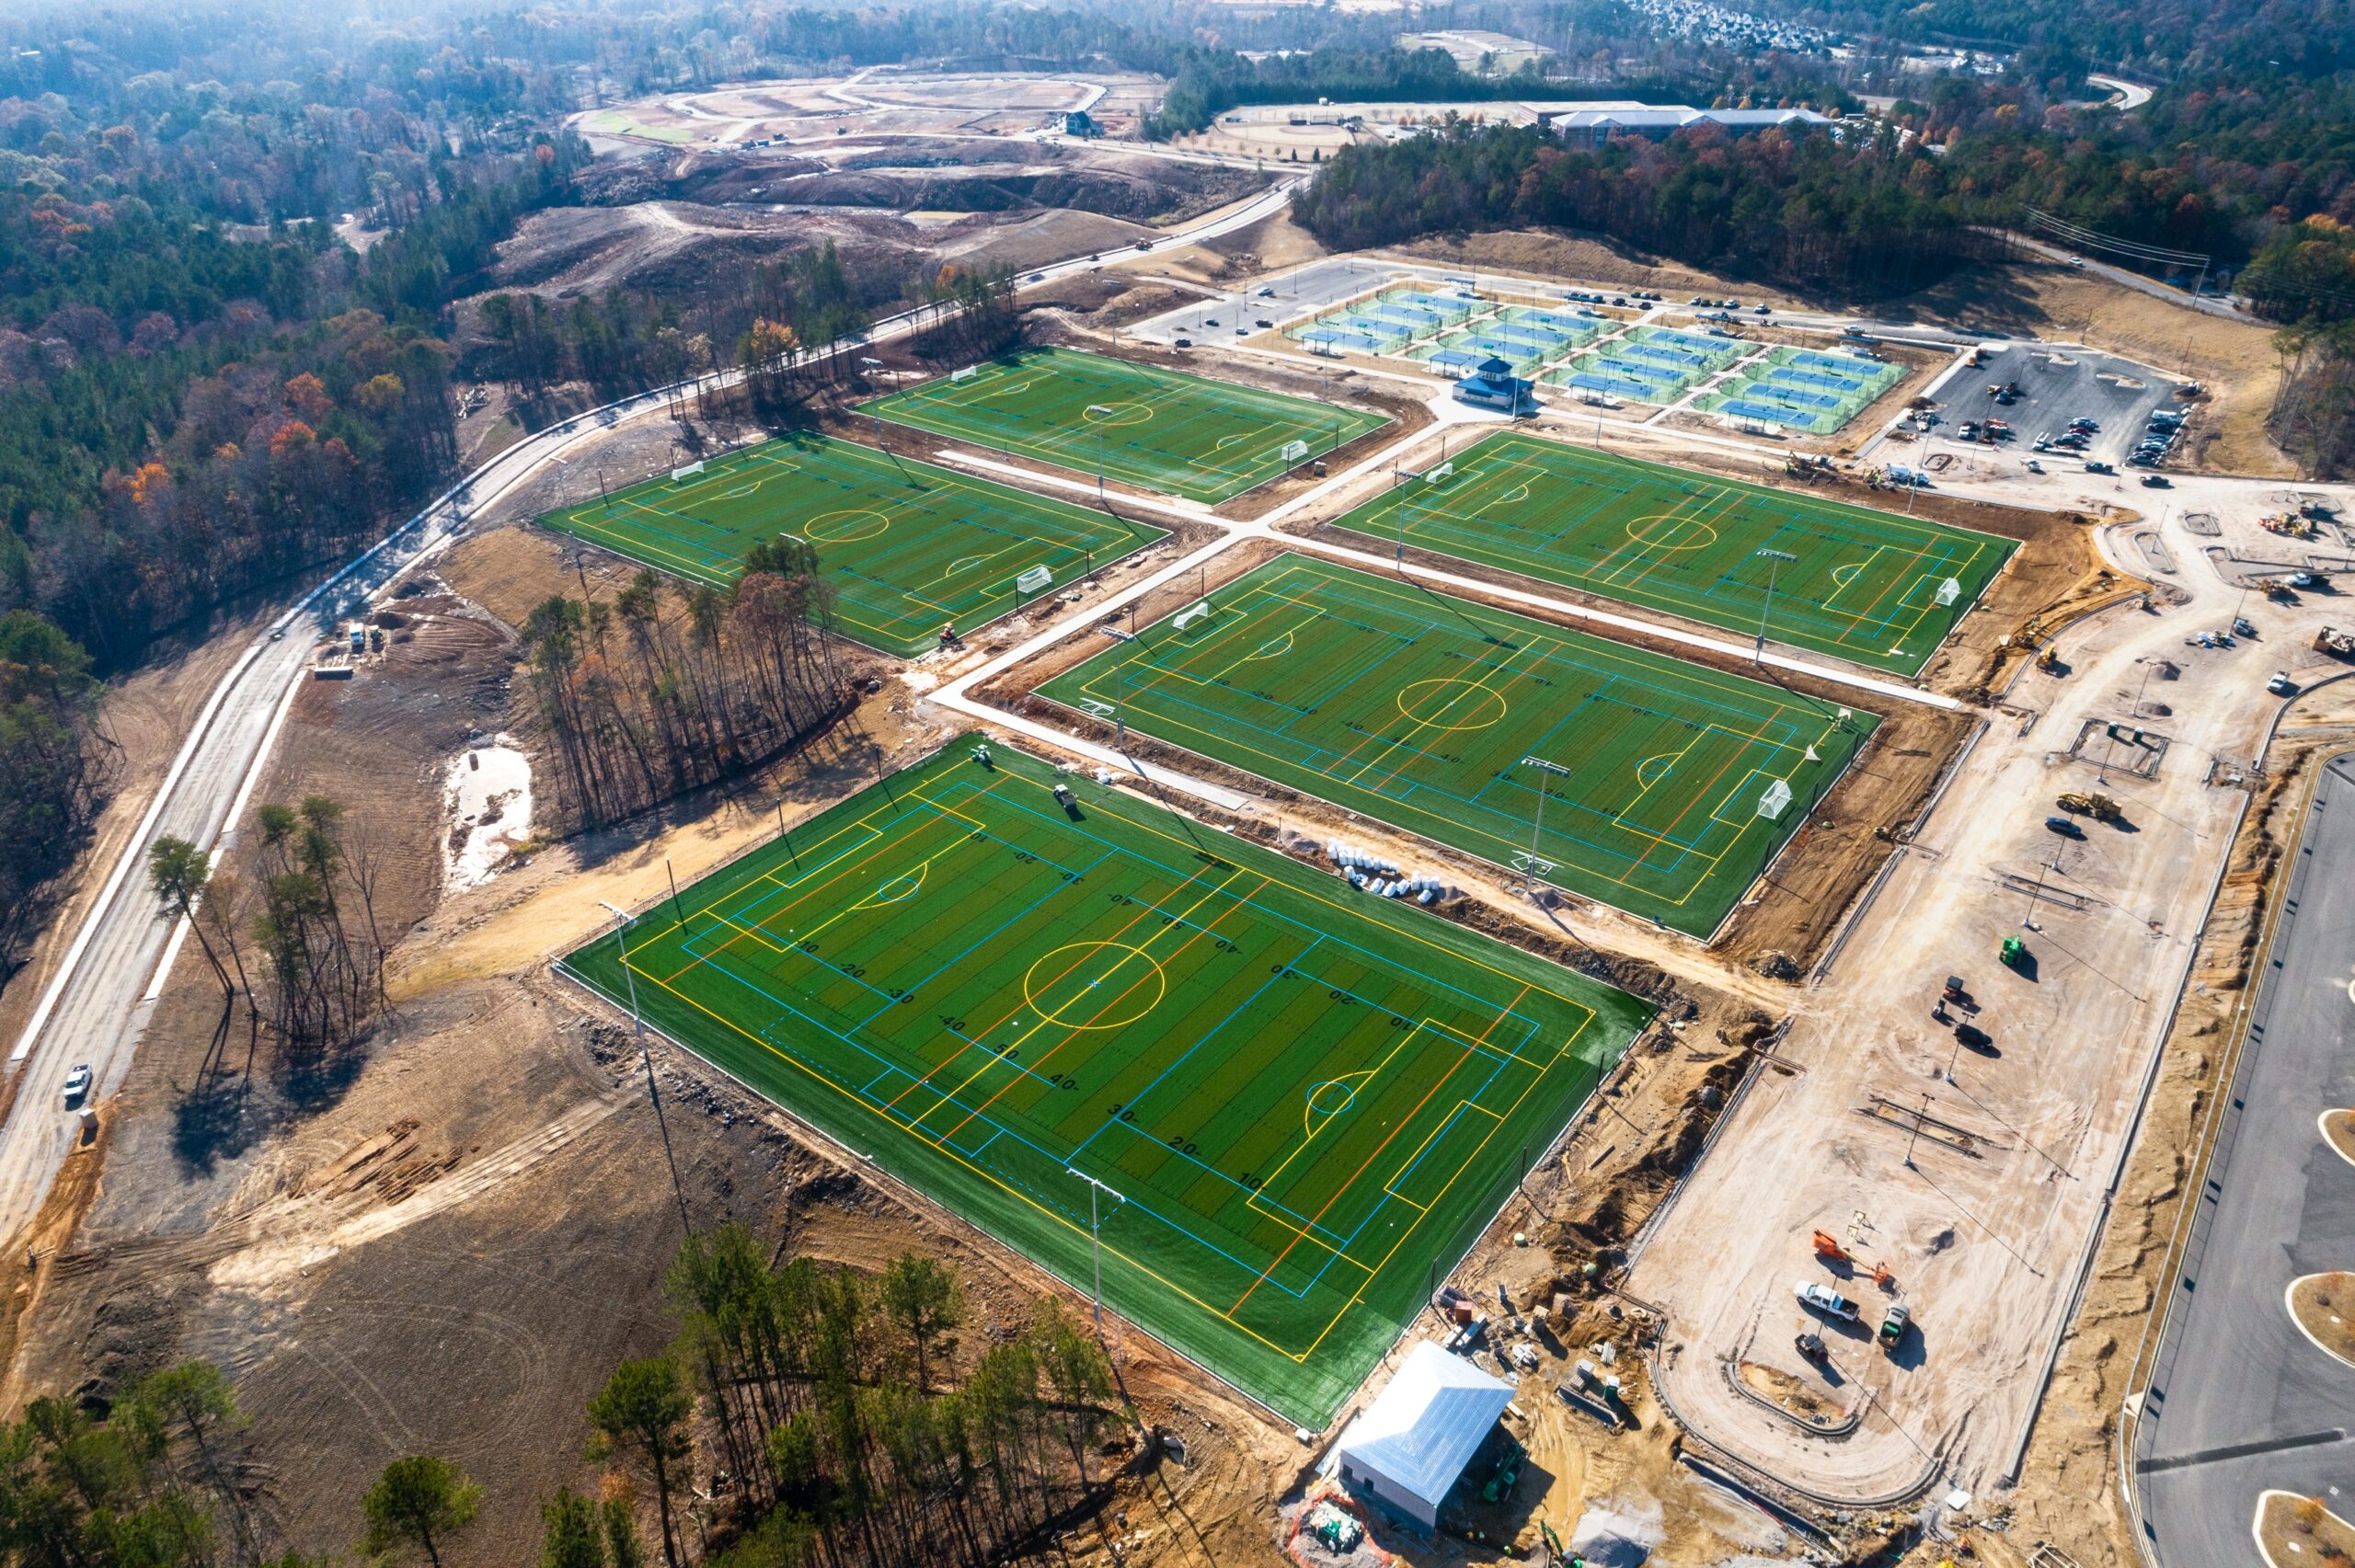 Alabama, Synthetic Turf, Artificial Turf, baseball field, multipurpose field, tennis